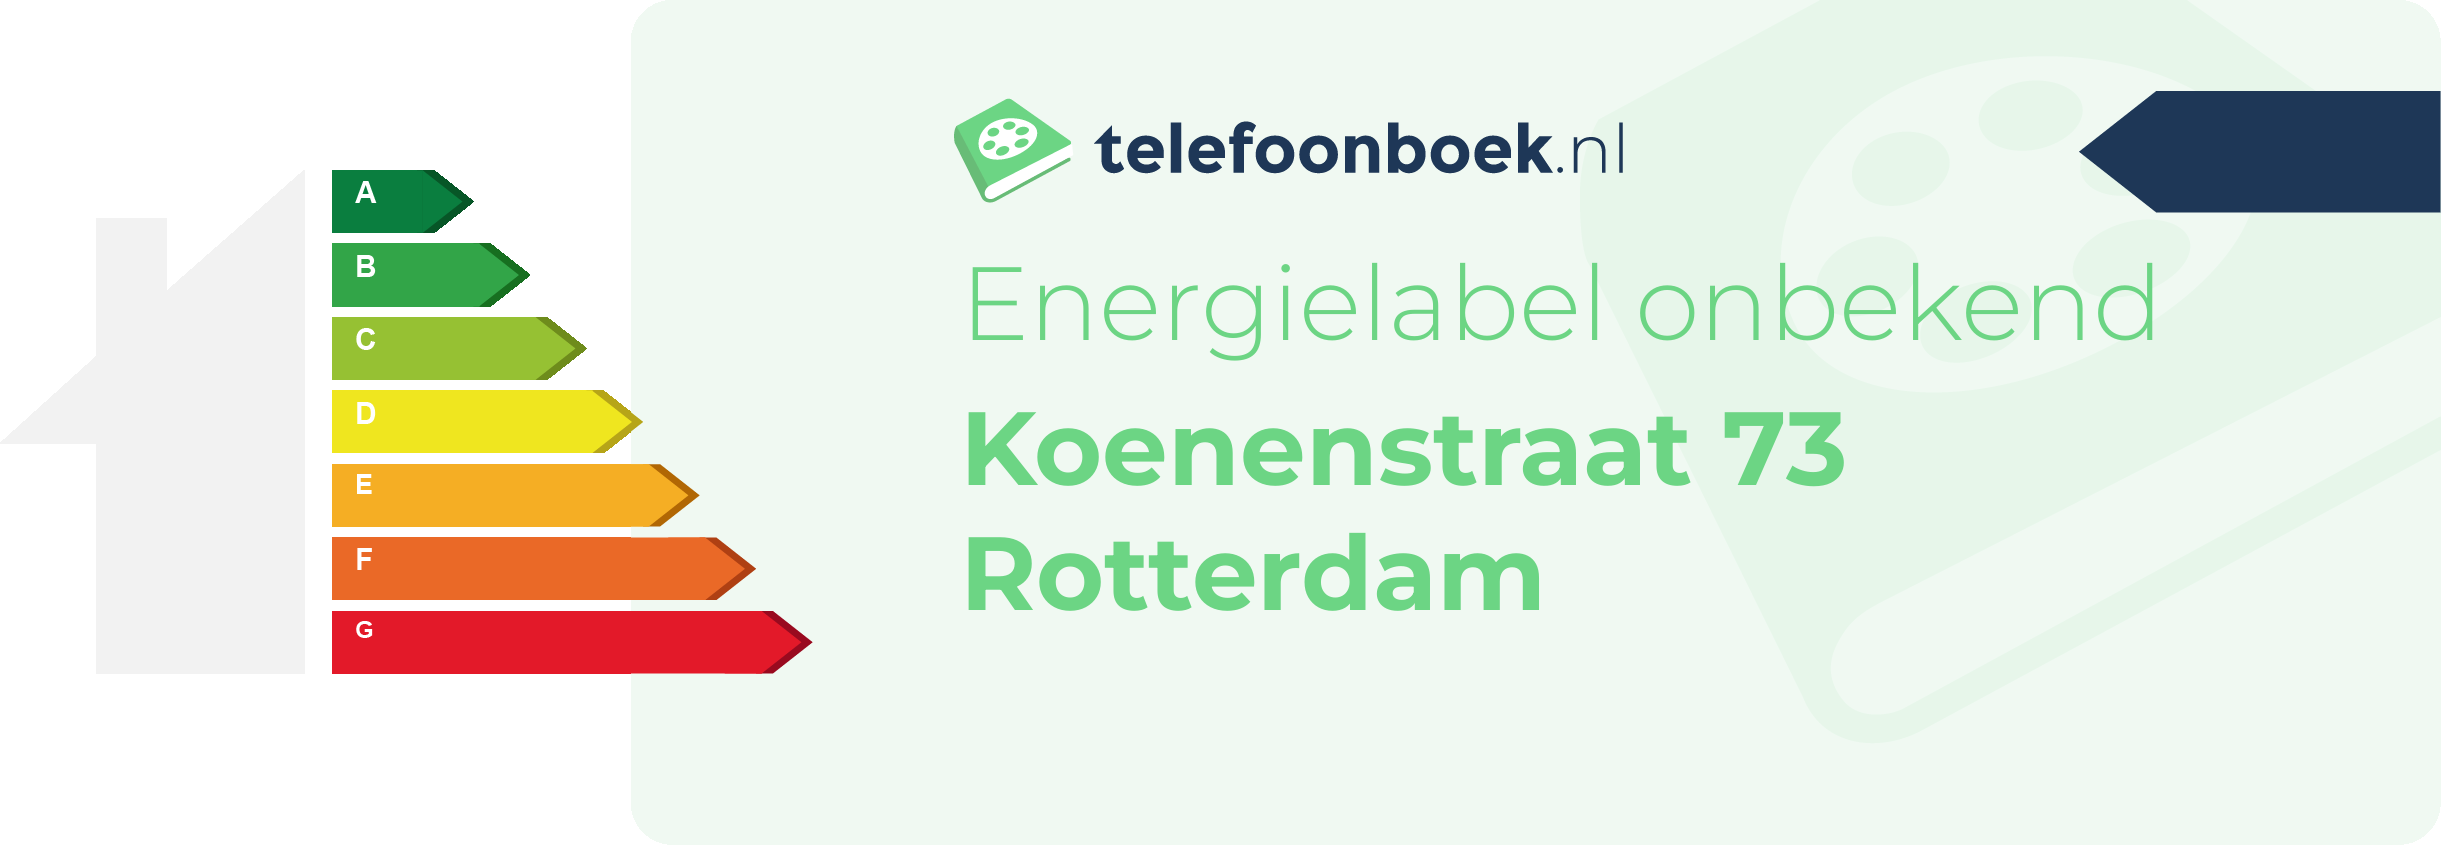 Energielabel Koenenstraat 73 Rotterdam